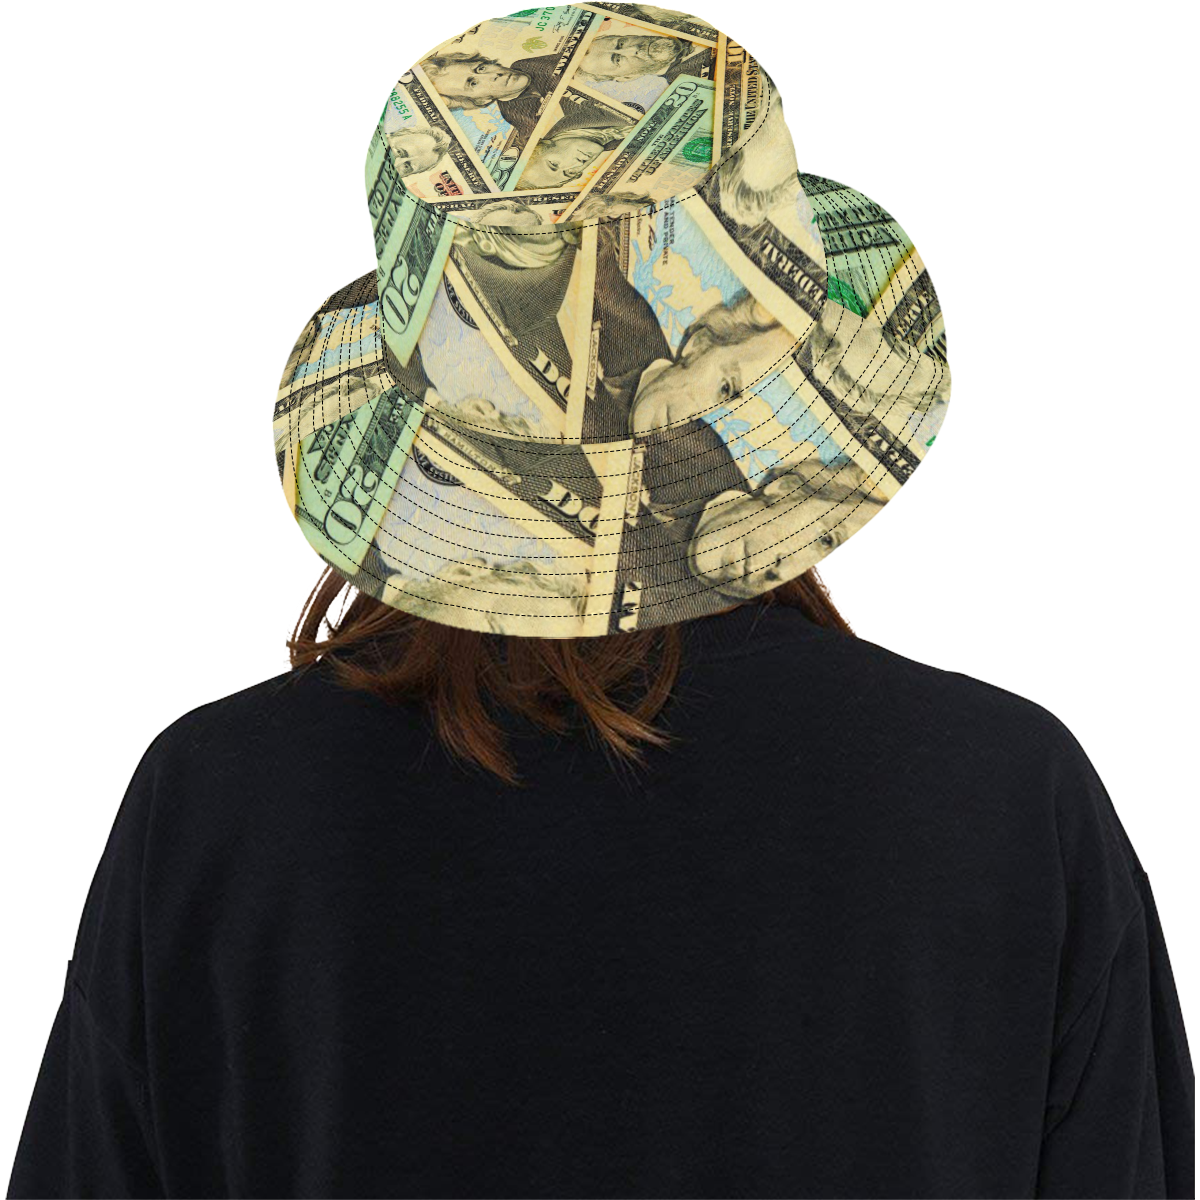 US DOLLARS All Over Print Bucket Hat